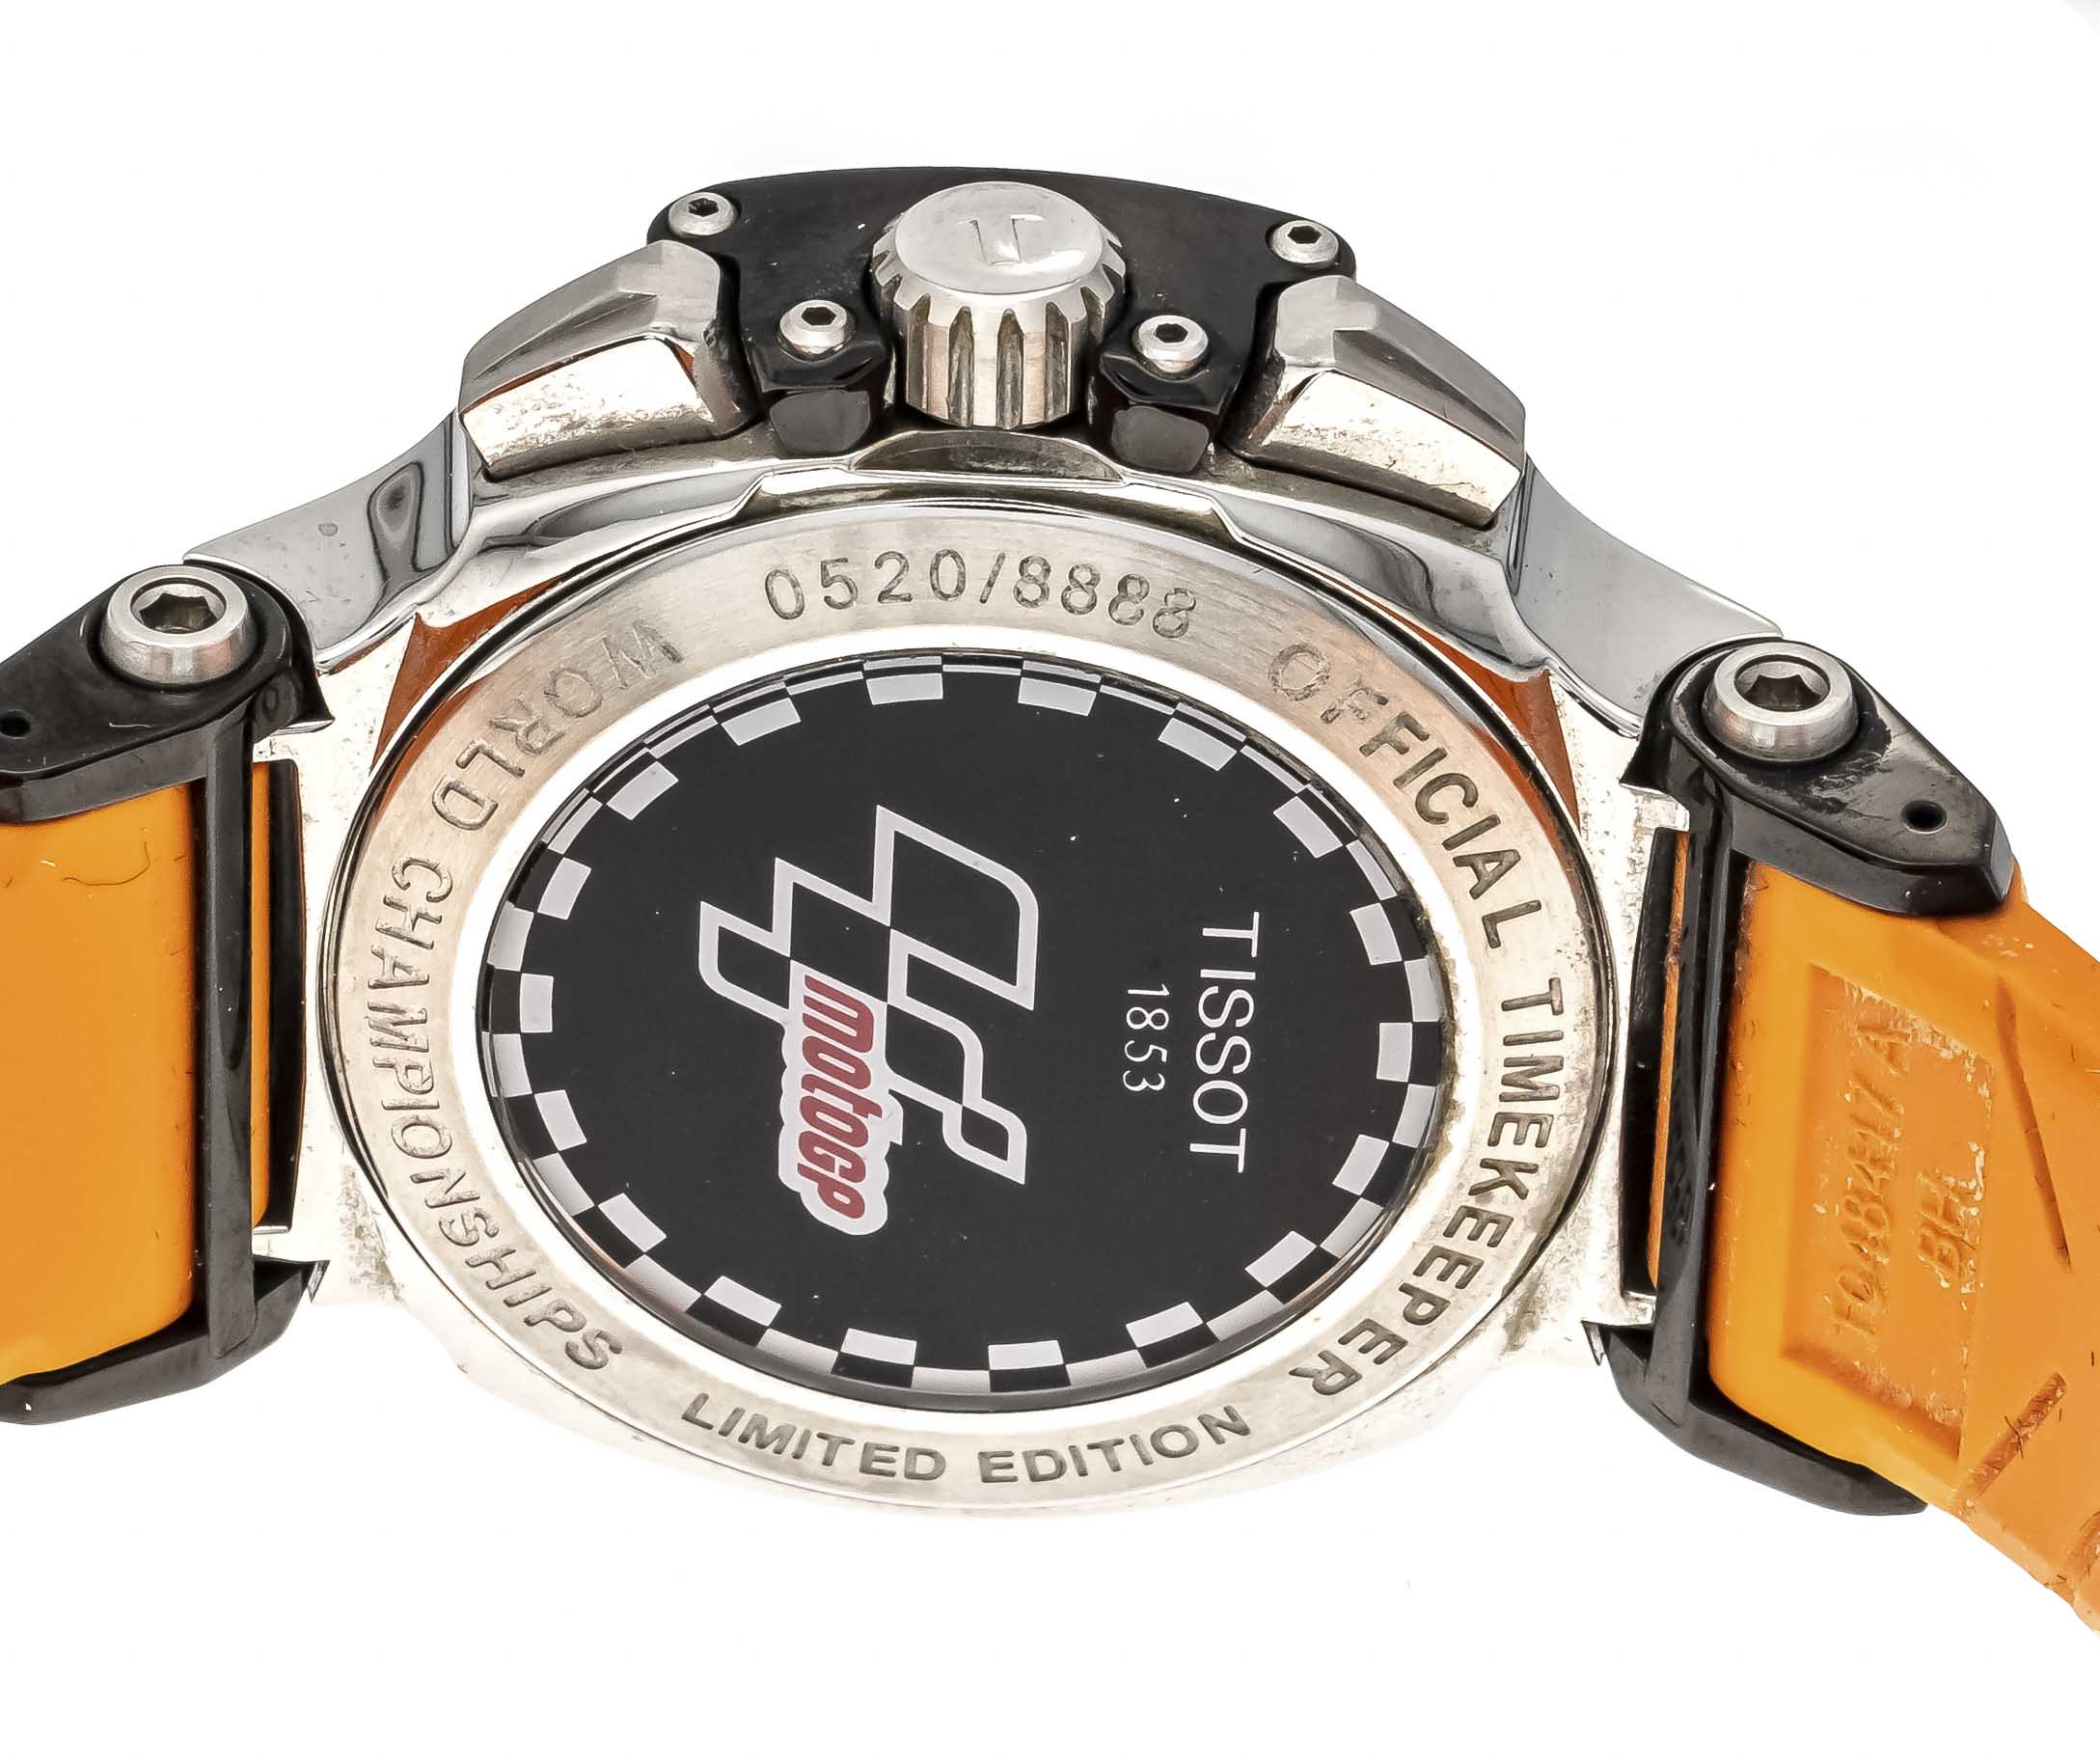 Tissot MotoGp, men's quartz watch, ref. T048.417.27.202.00A, from 2011, ltd. Edition 0520/8888, - Image 2 of 3